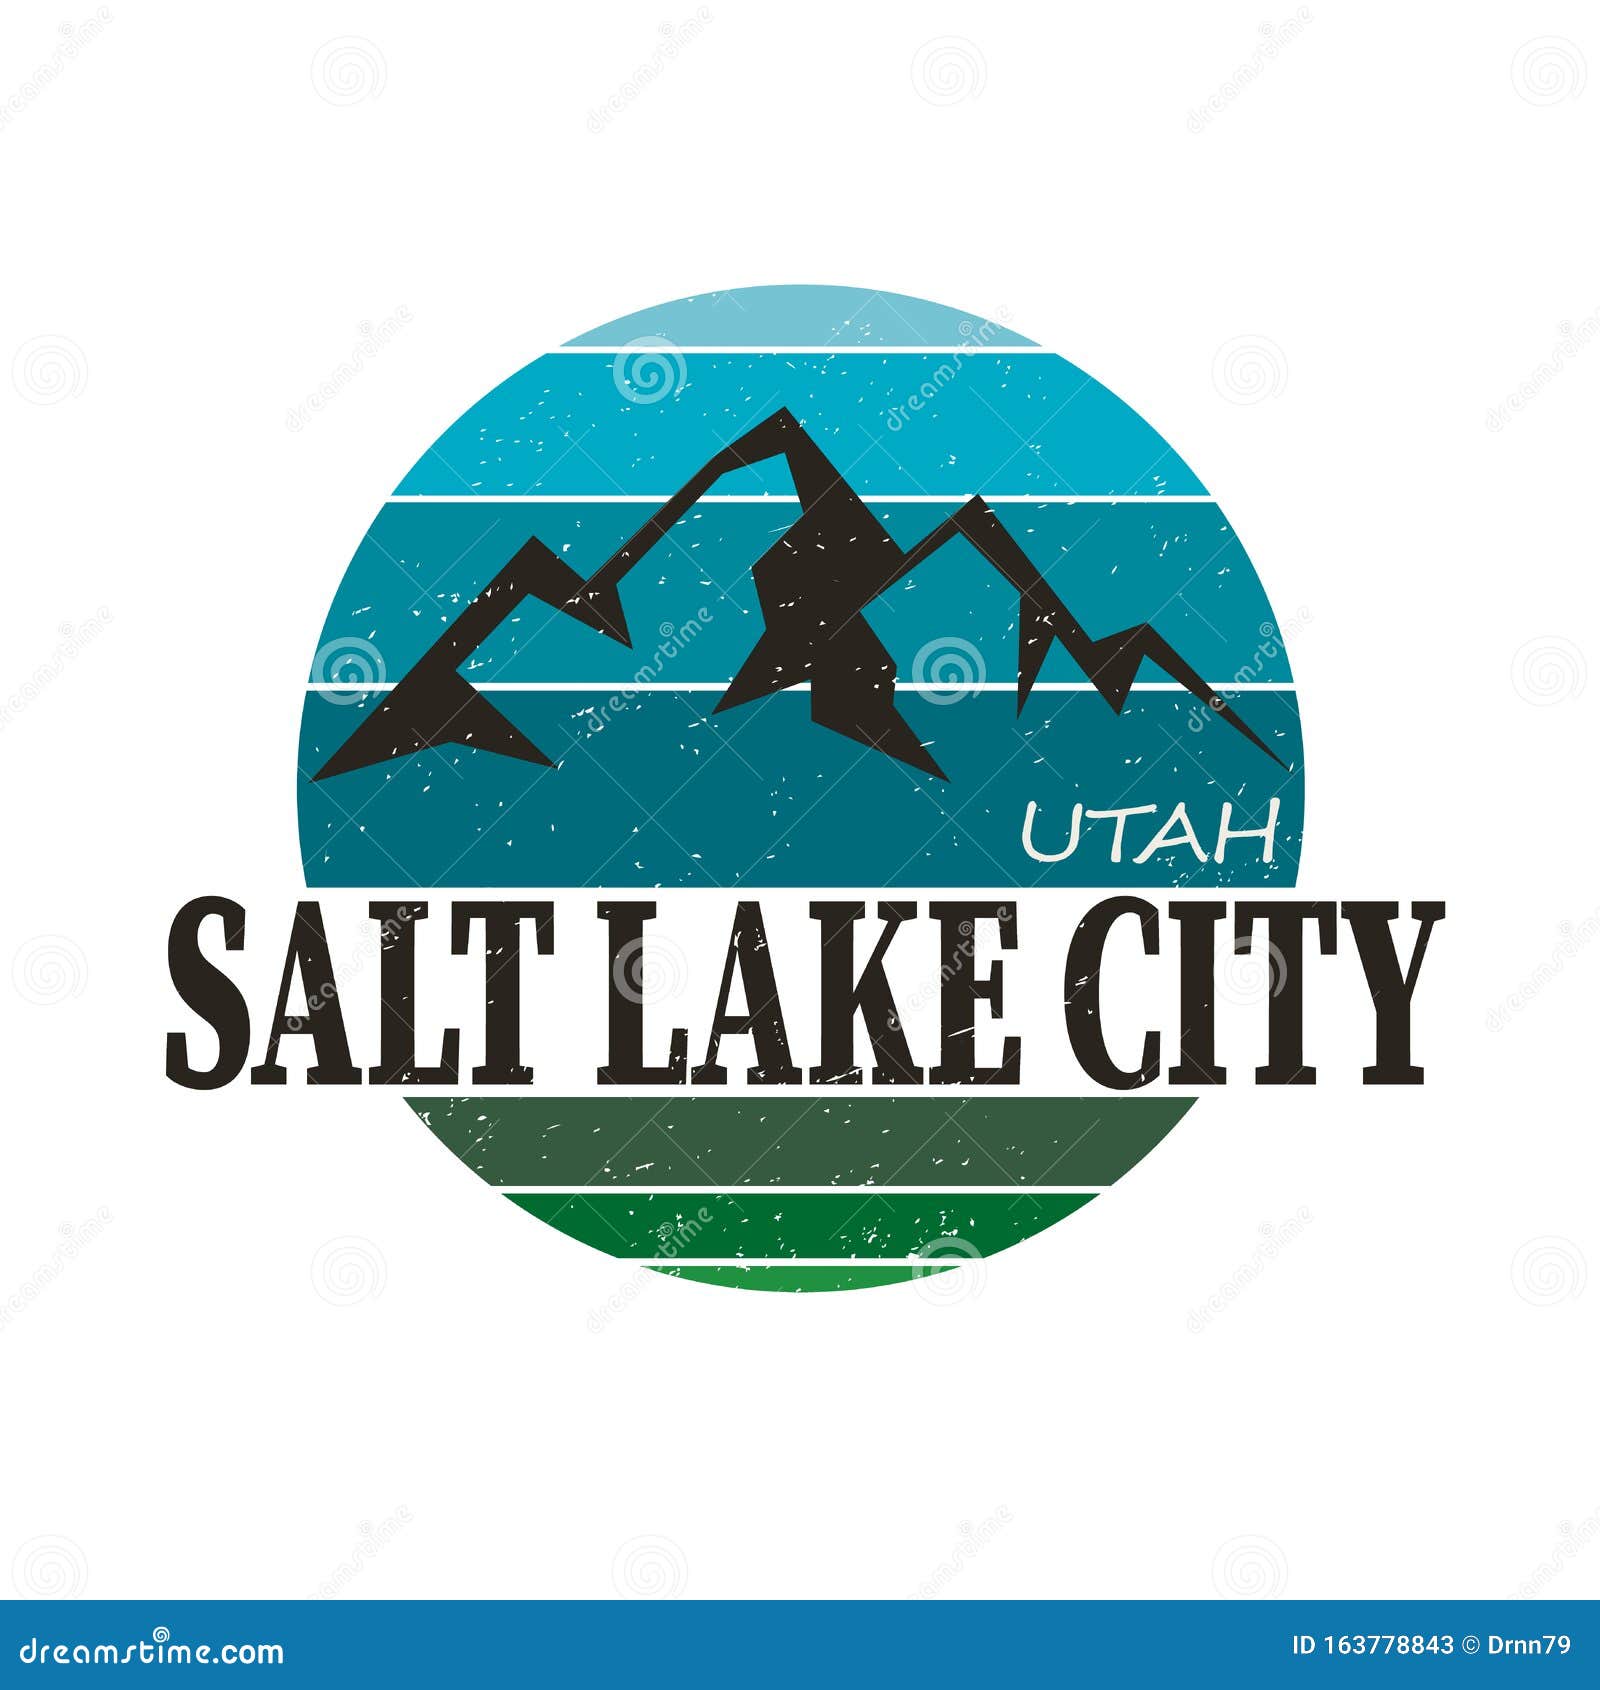 Salt Lake City, Utah Tourism